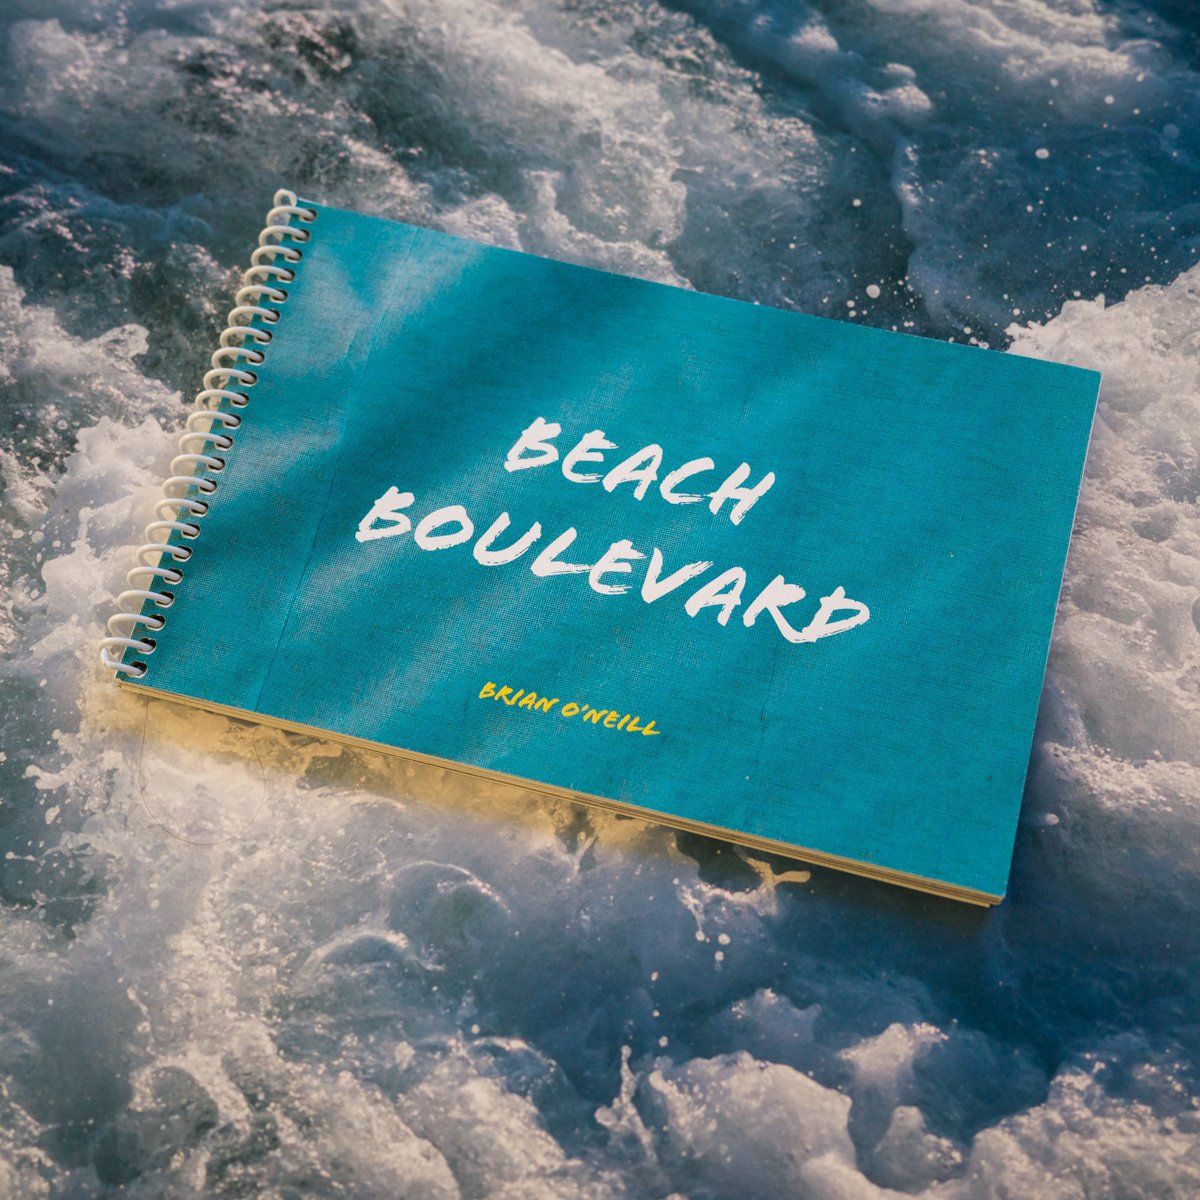 Brian O'Neill: Beach Boulevard